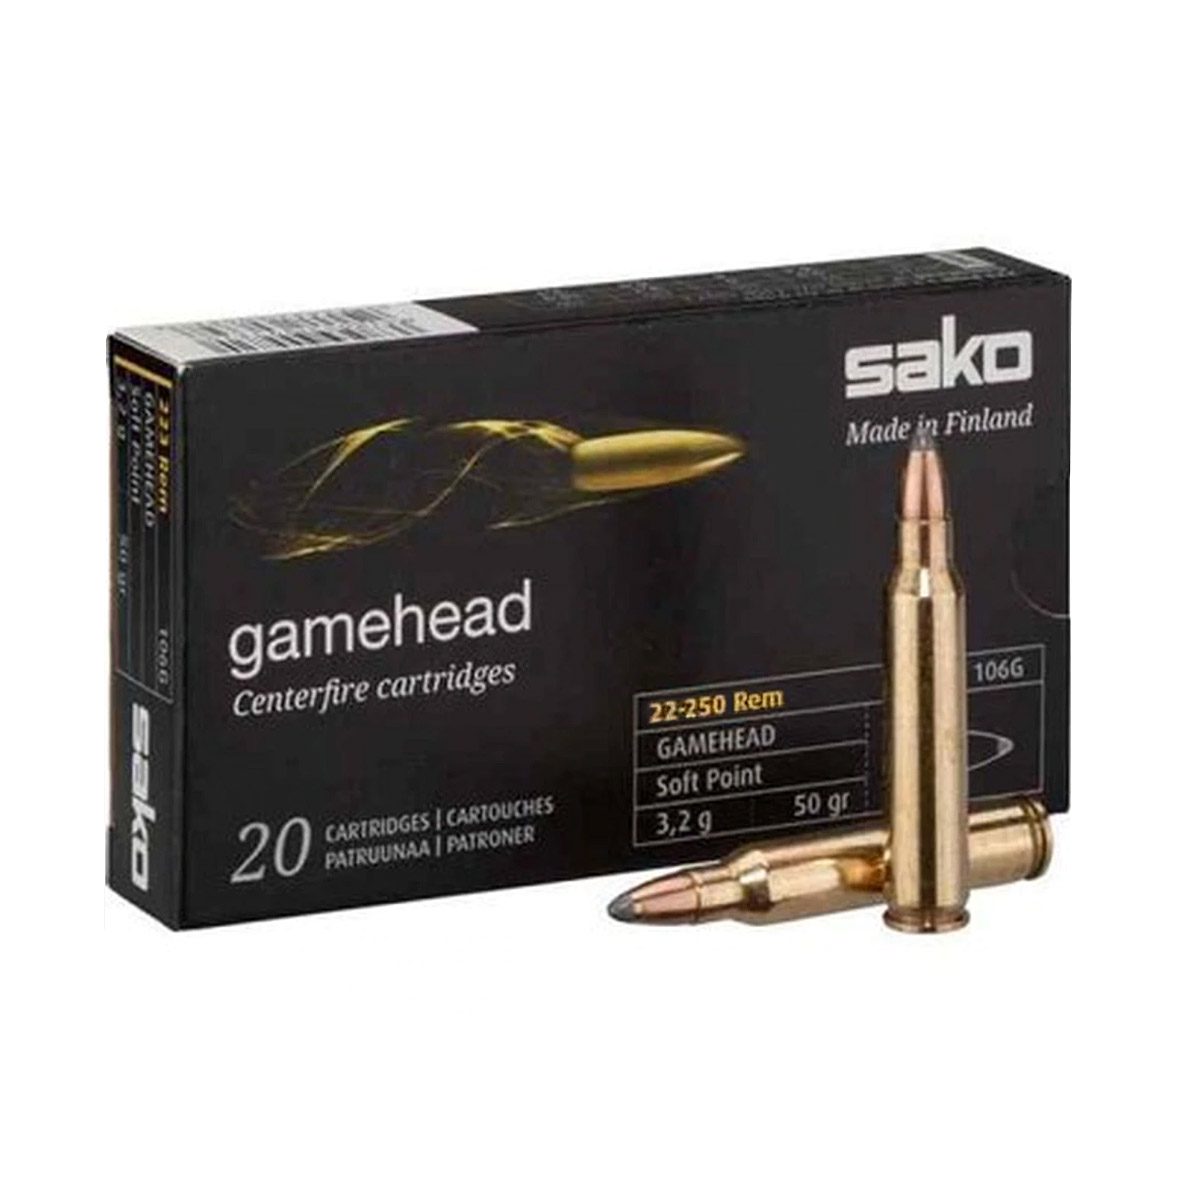 Sako Ammunition 22-250 Rem. Gamehead 50 Gr. – 20 Rounds